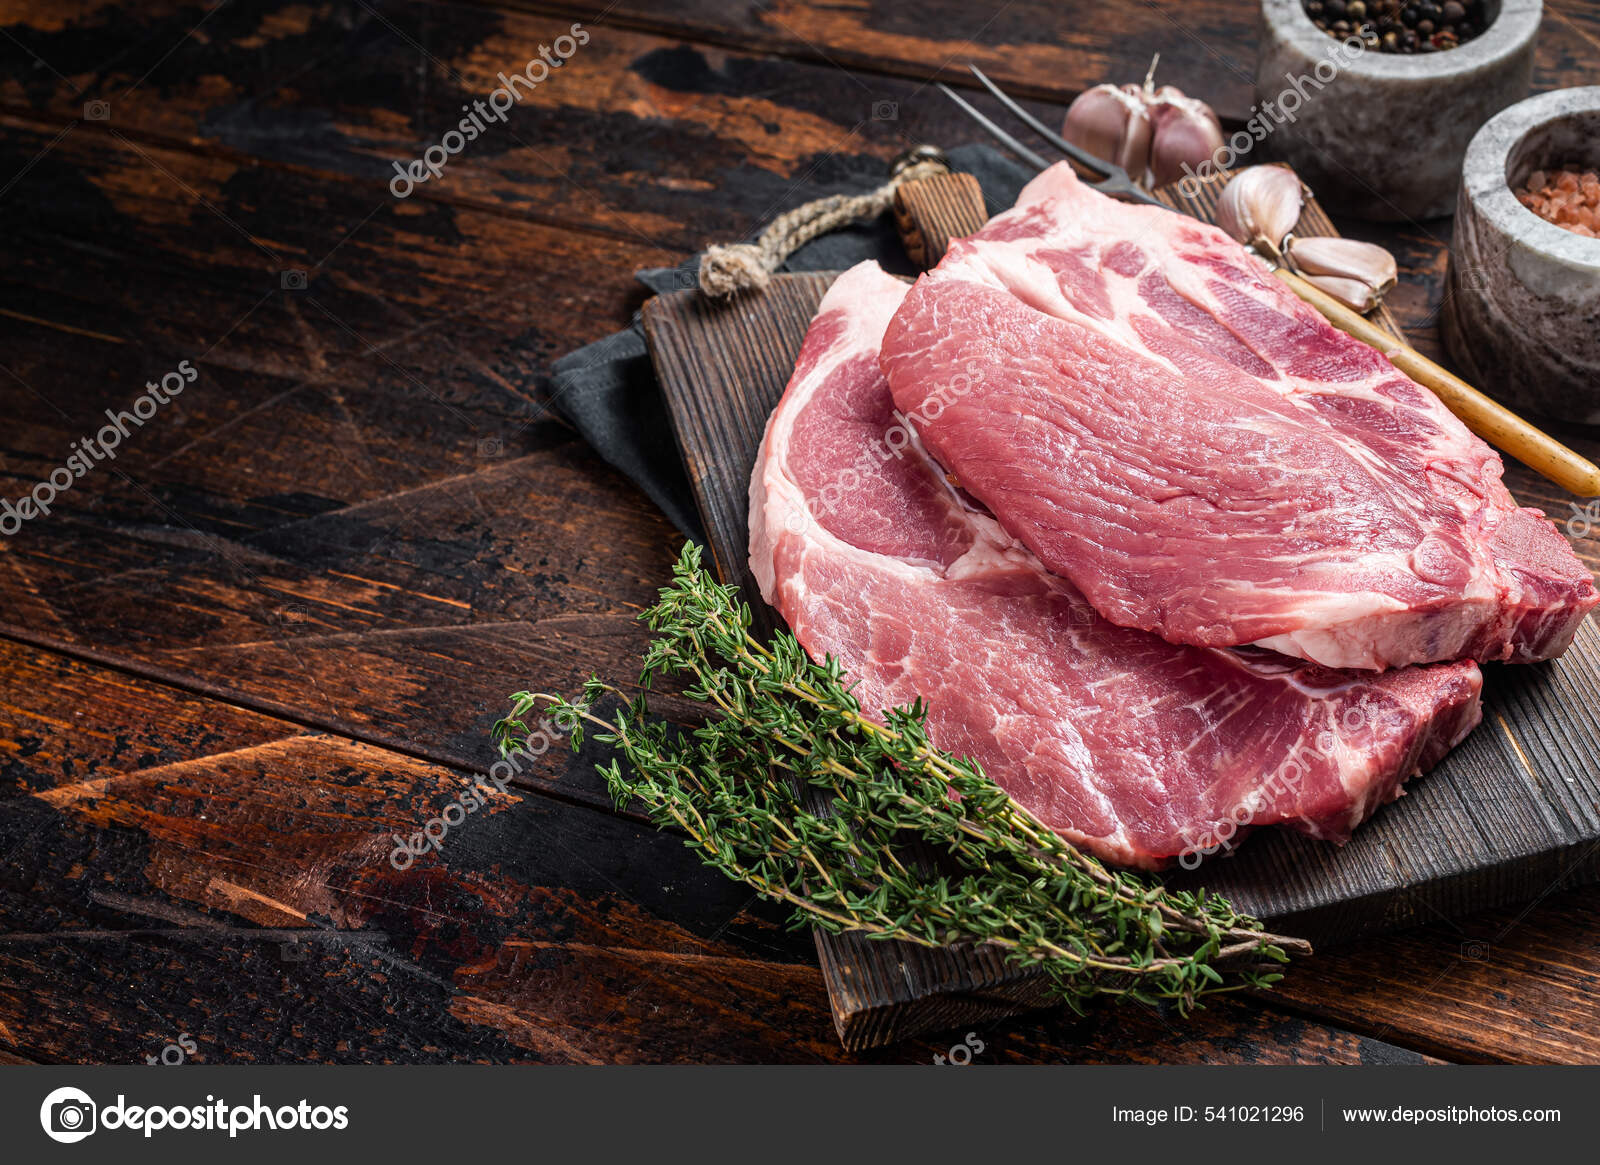 https://st.depositphotos.com/22628872/54102/i/1600/depositphotos_541021296-stock-photo-butcher-raw-pork-steak-from.jpg